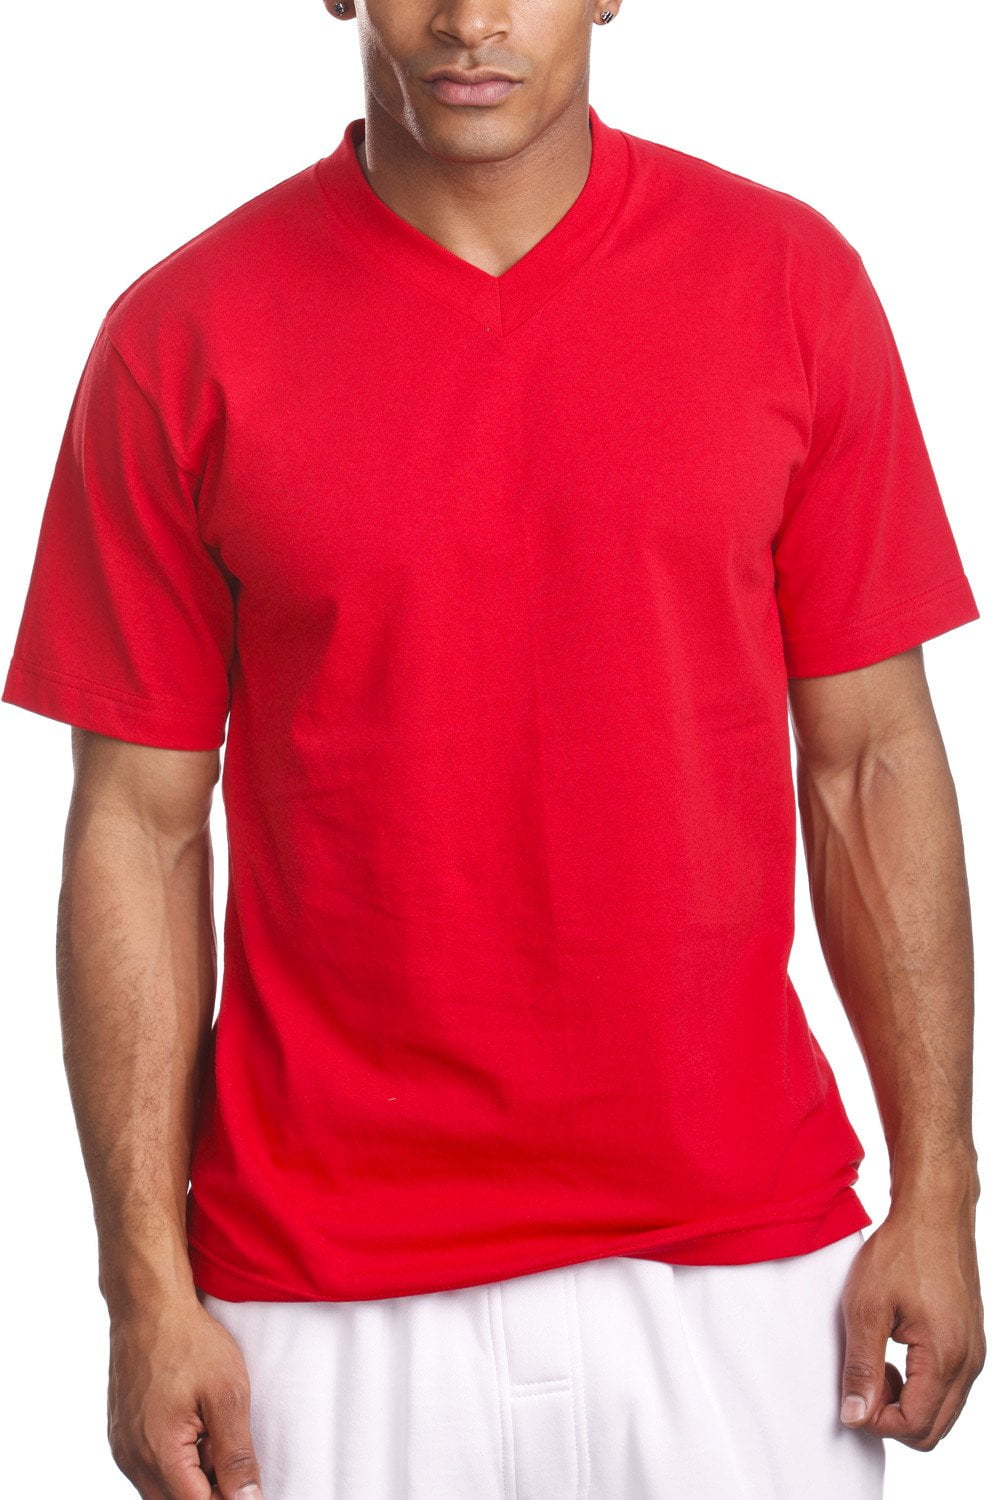 Pro 5 V-Neck Mens Short Sleeve T-Shirt,Red,4XL - Walmart.com